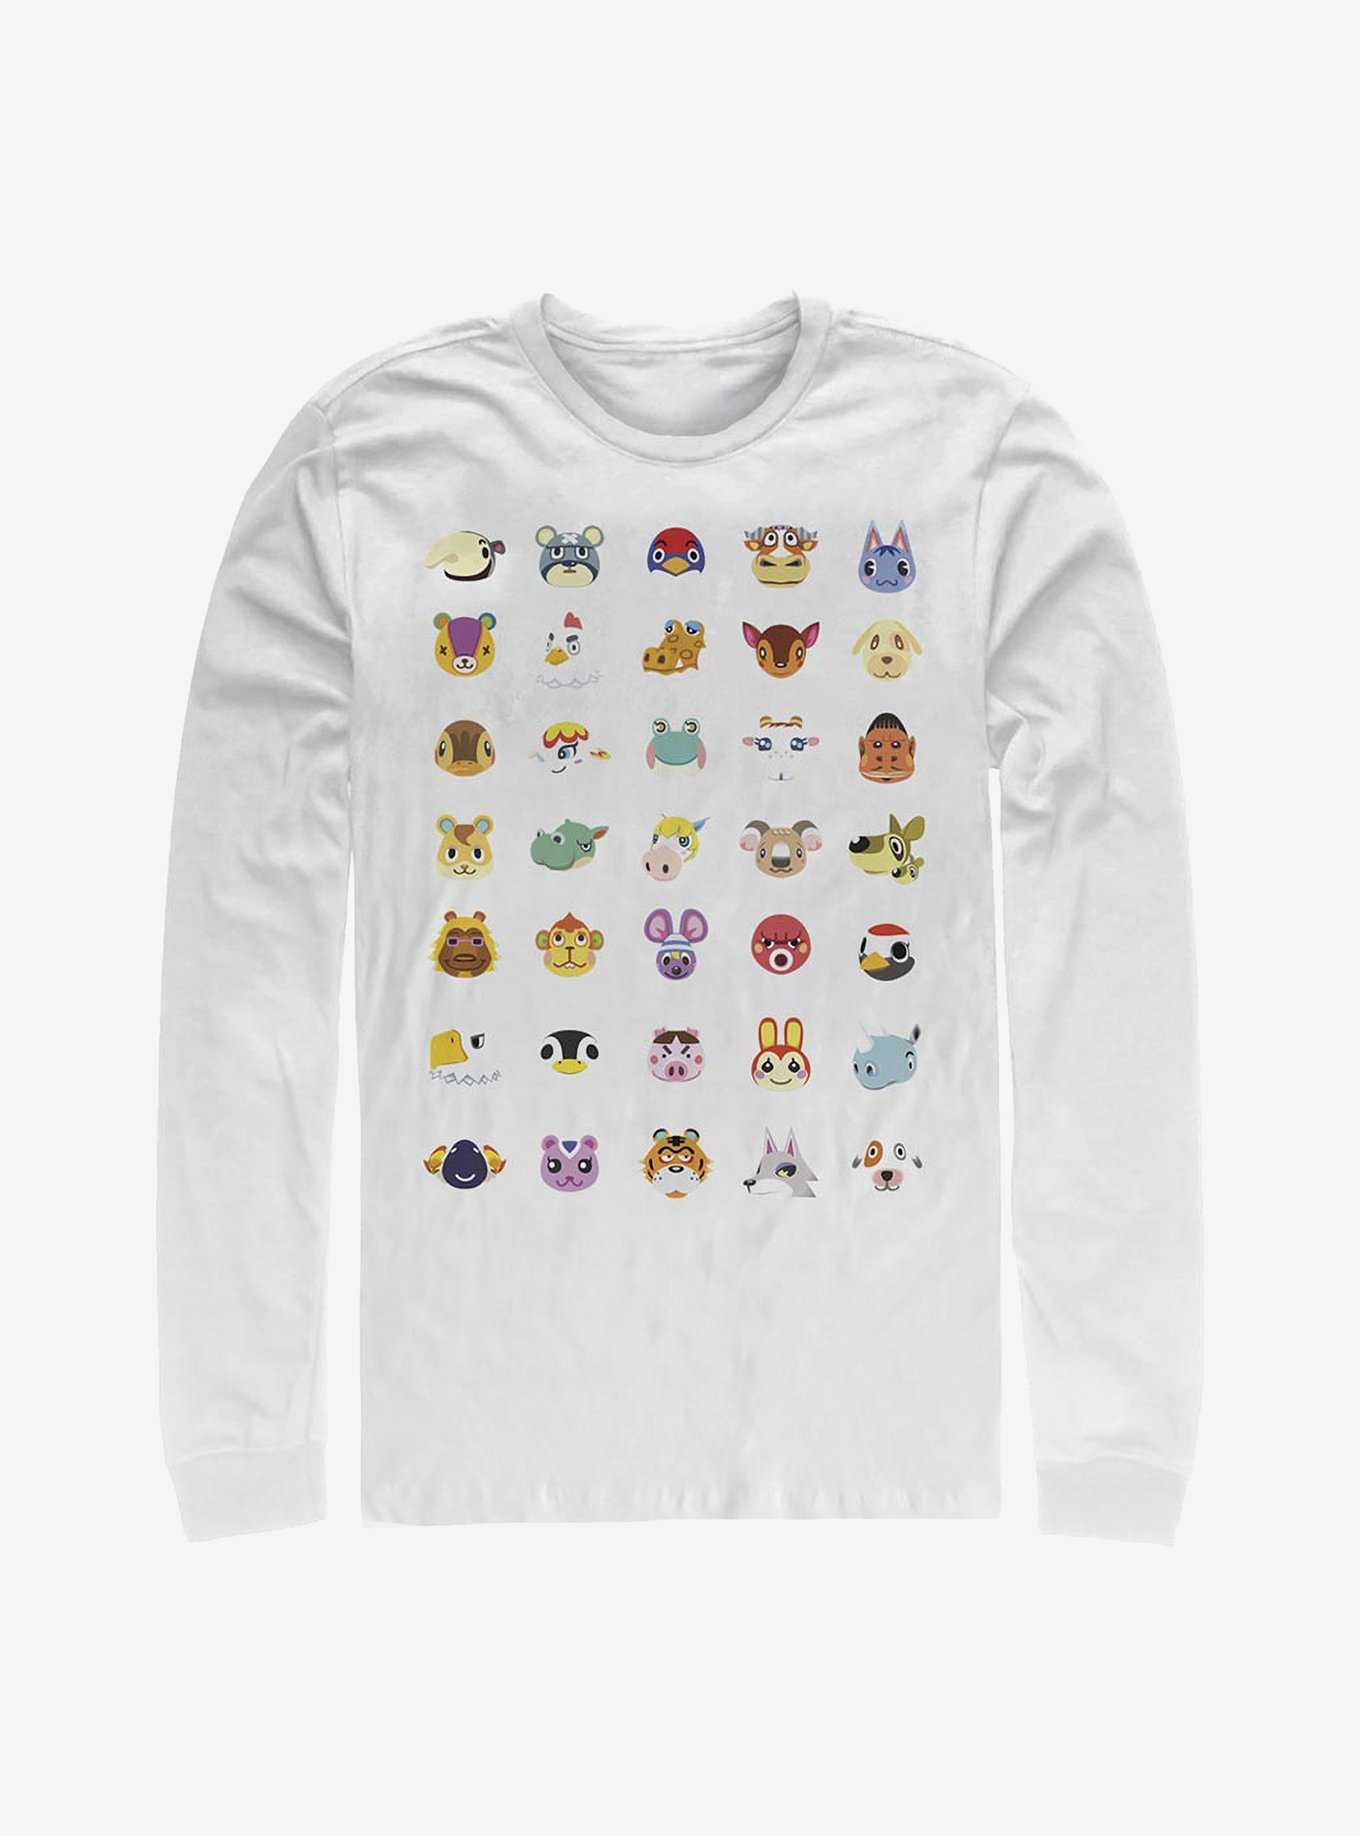 Nintendo Animal Crossing Character Heads Long-Sleeve T-Shirt, , hi-res